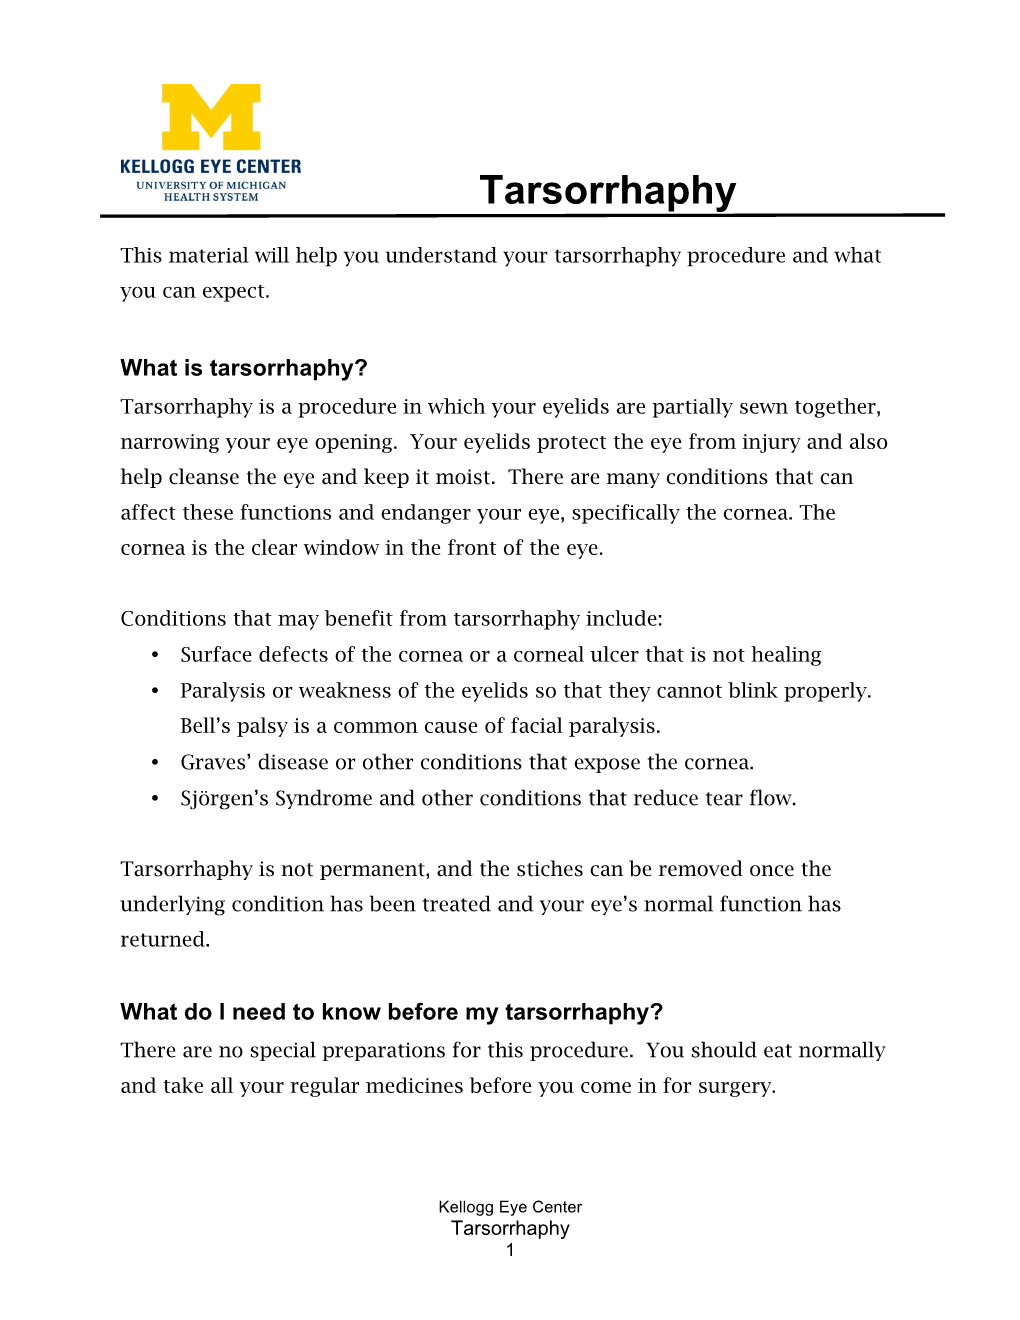 Tarsorrhaphy